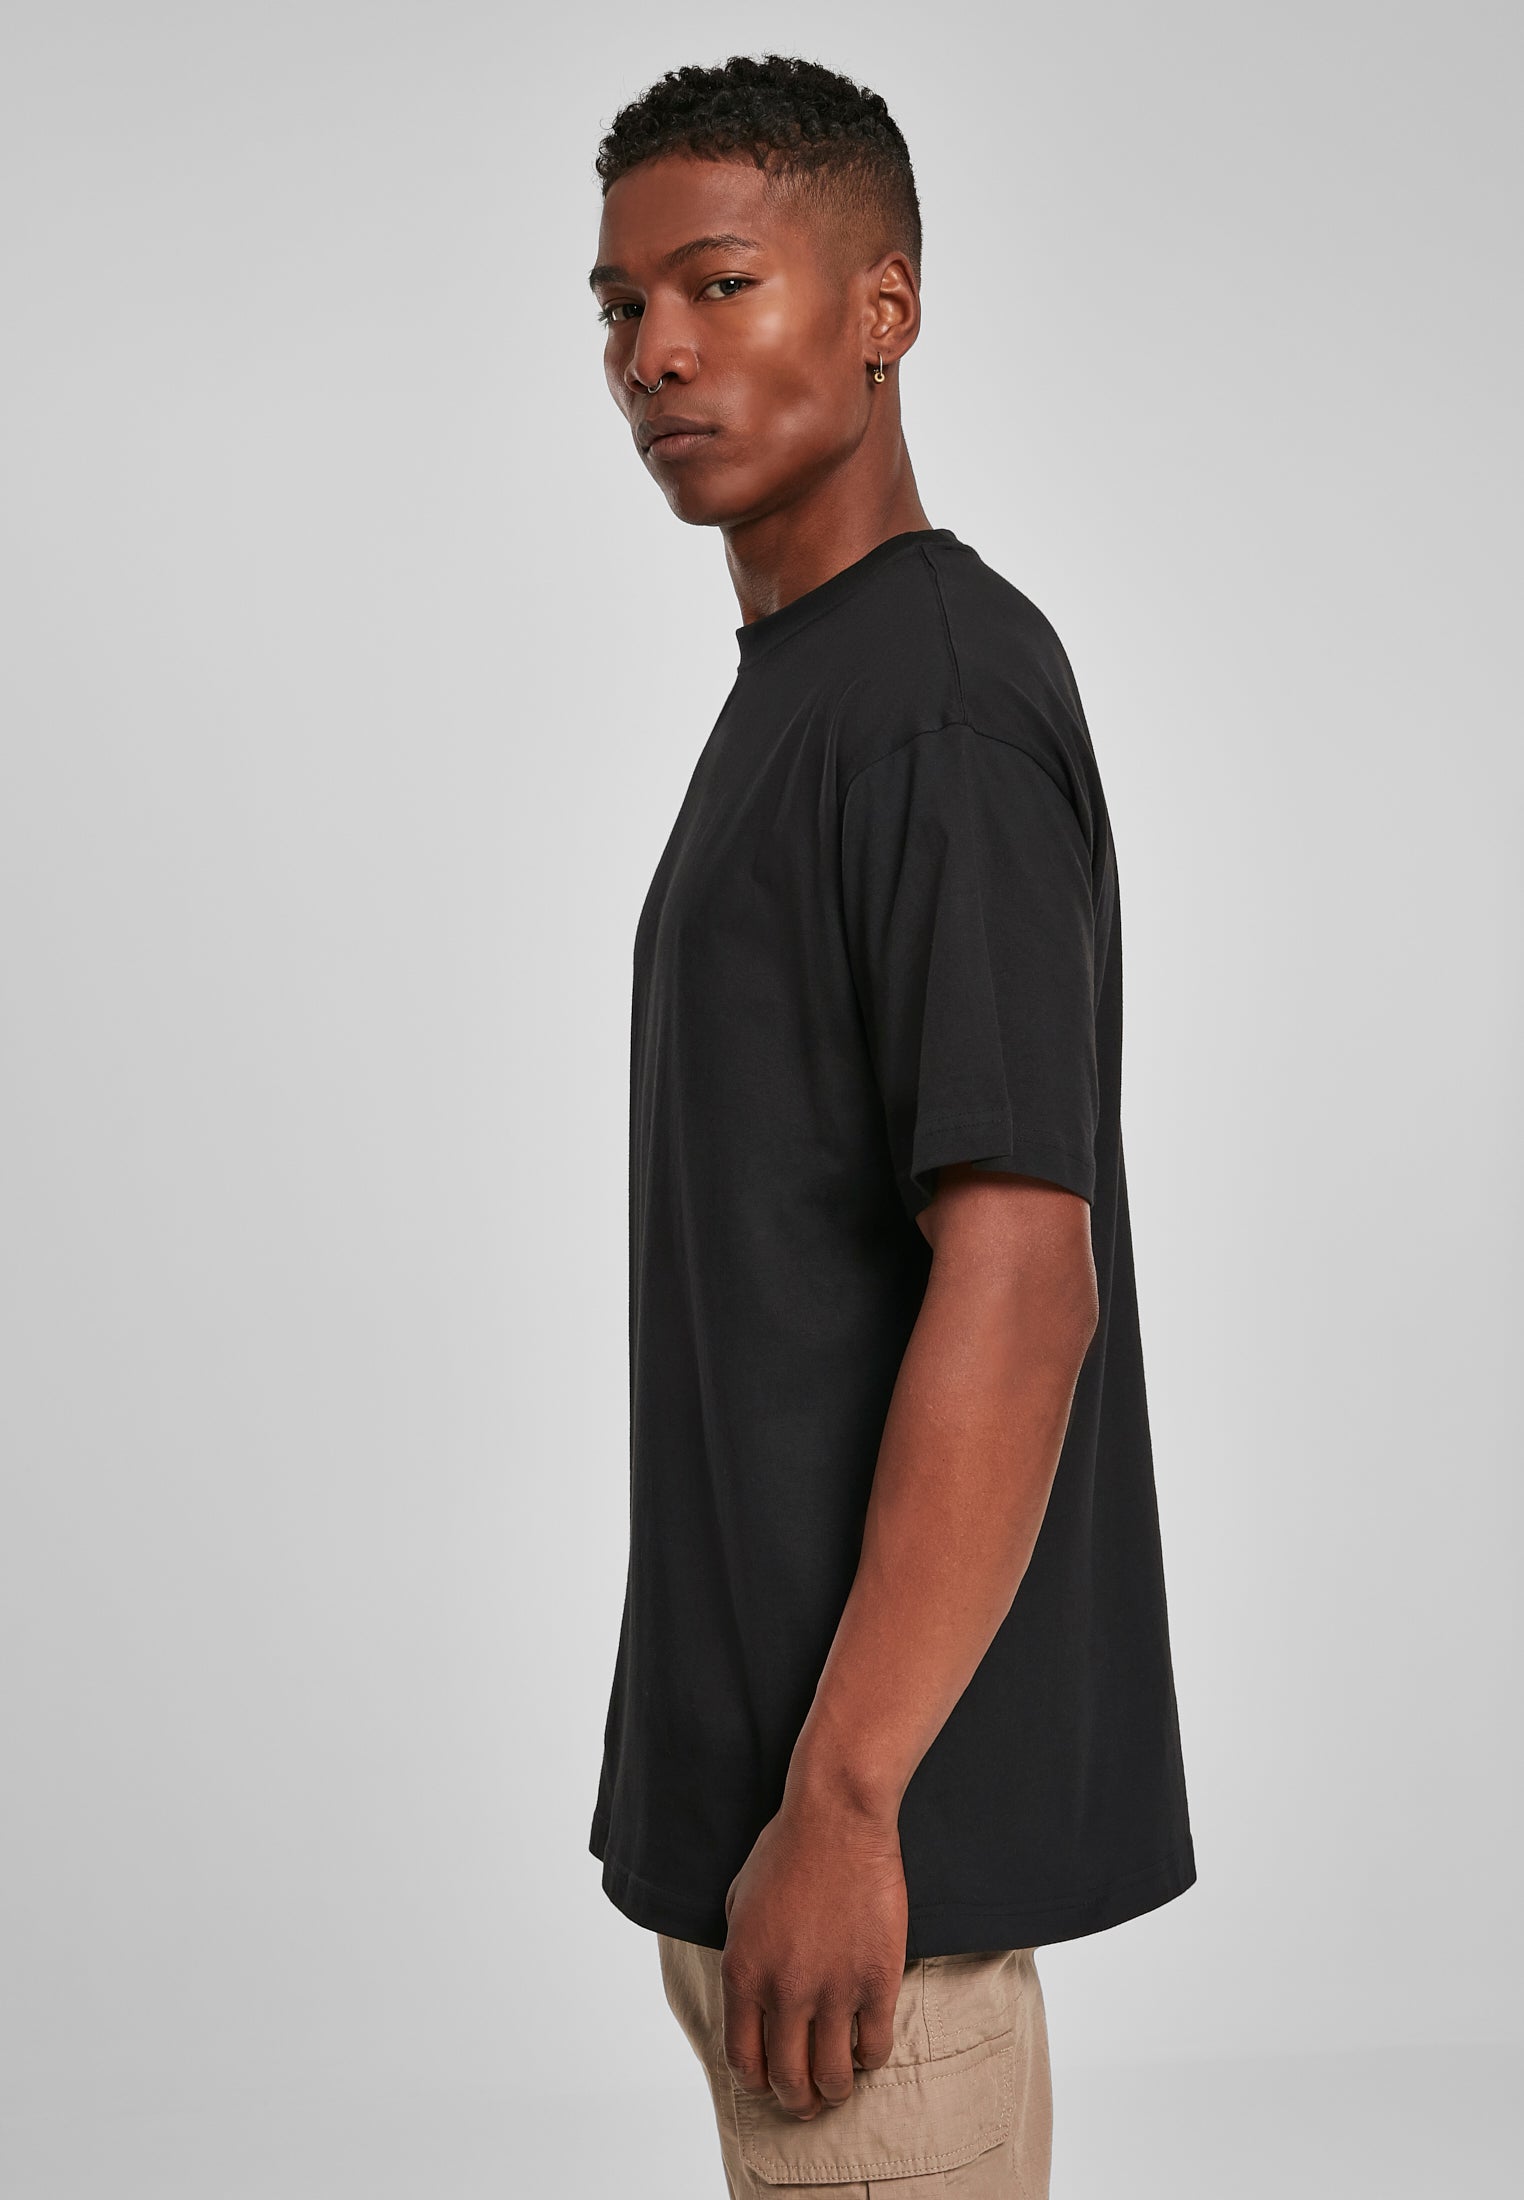 Dasué rounded Black Oversized T-Shirt